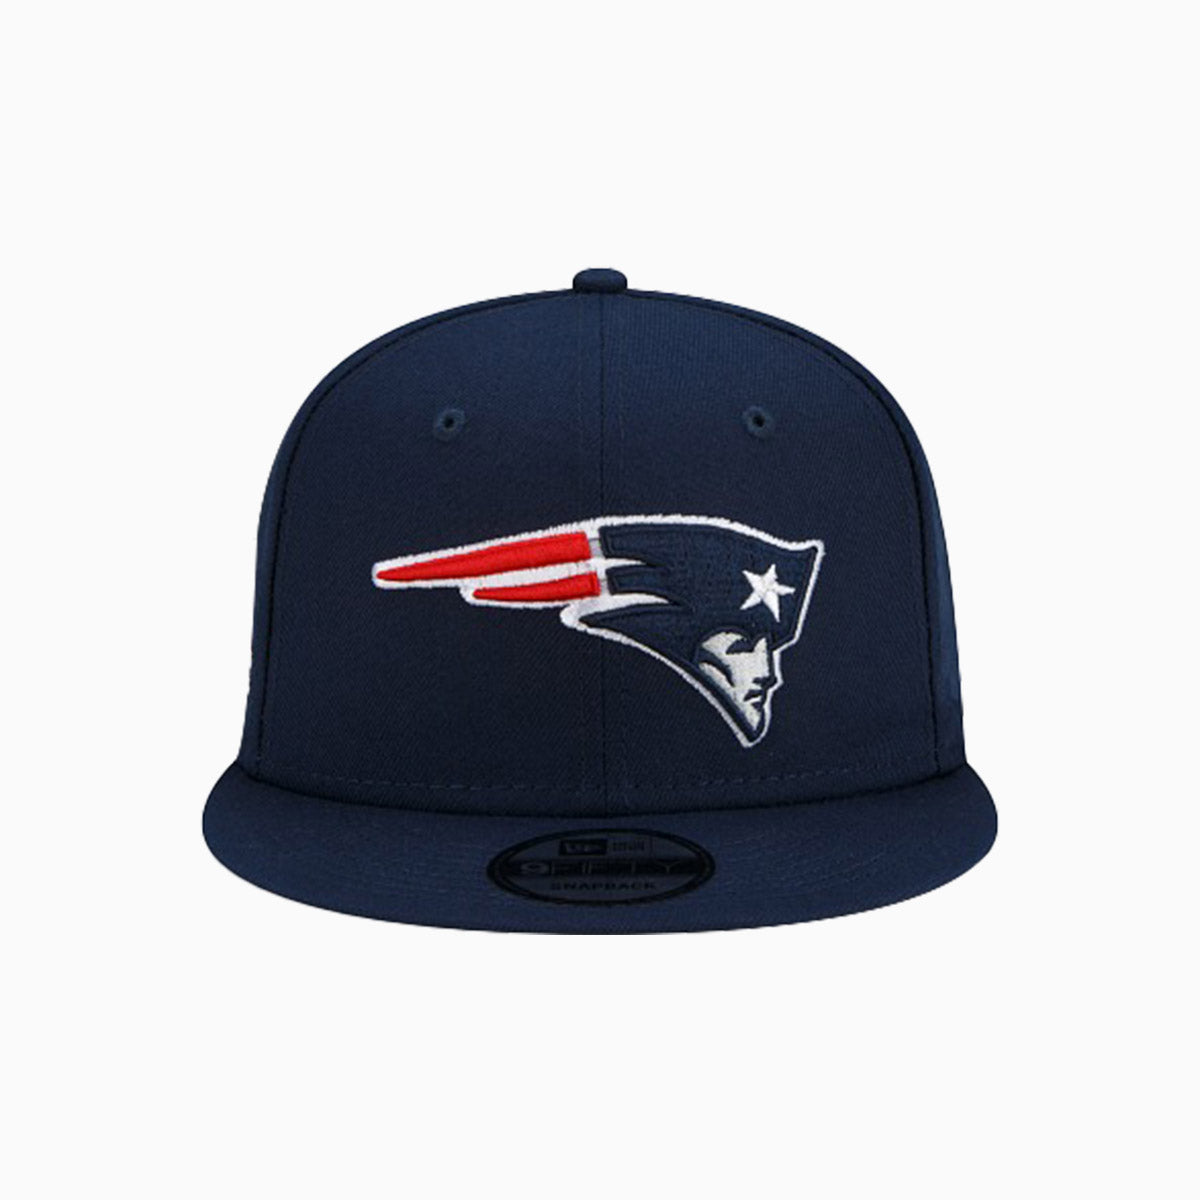 Men's New Era White/Red New England Patriots Retro Sport 9FIFTY Snapback Hat